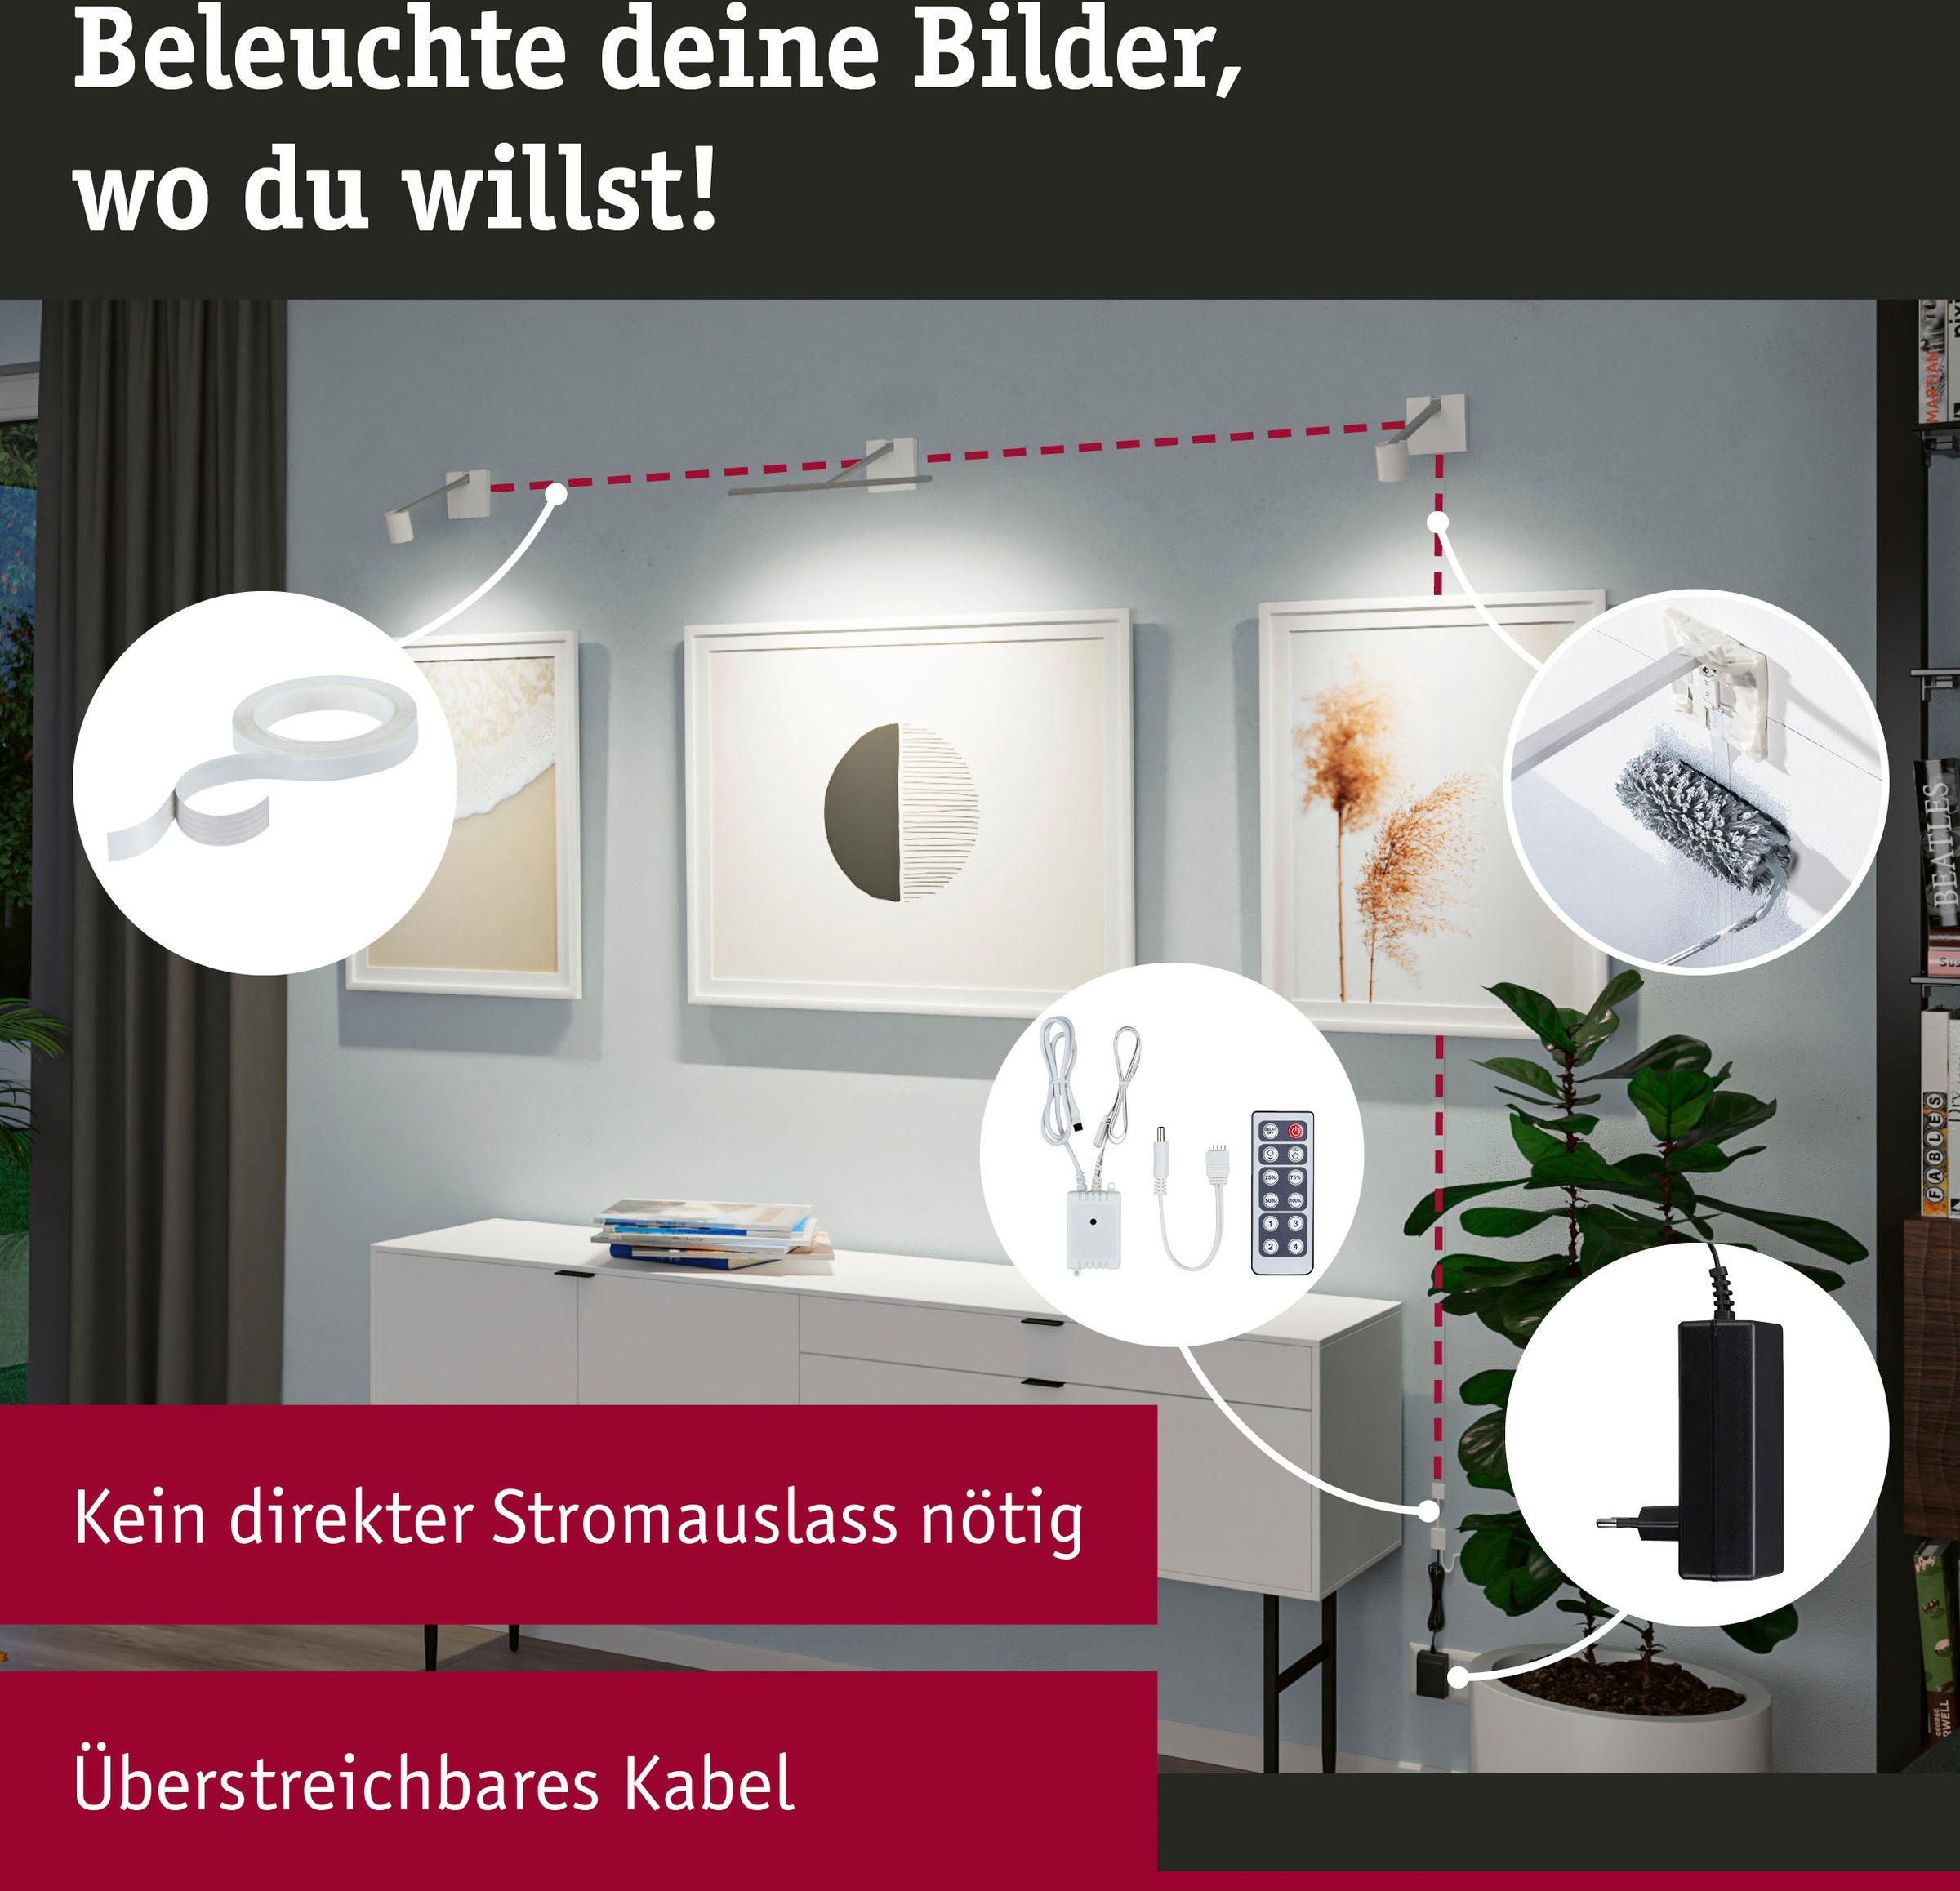 Paulmann LED Bilderleuchte »Adelia«, 1 flammig-flammig, dimmbar online  kaufen